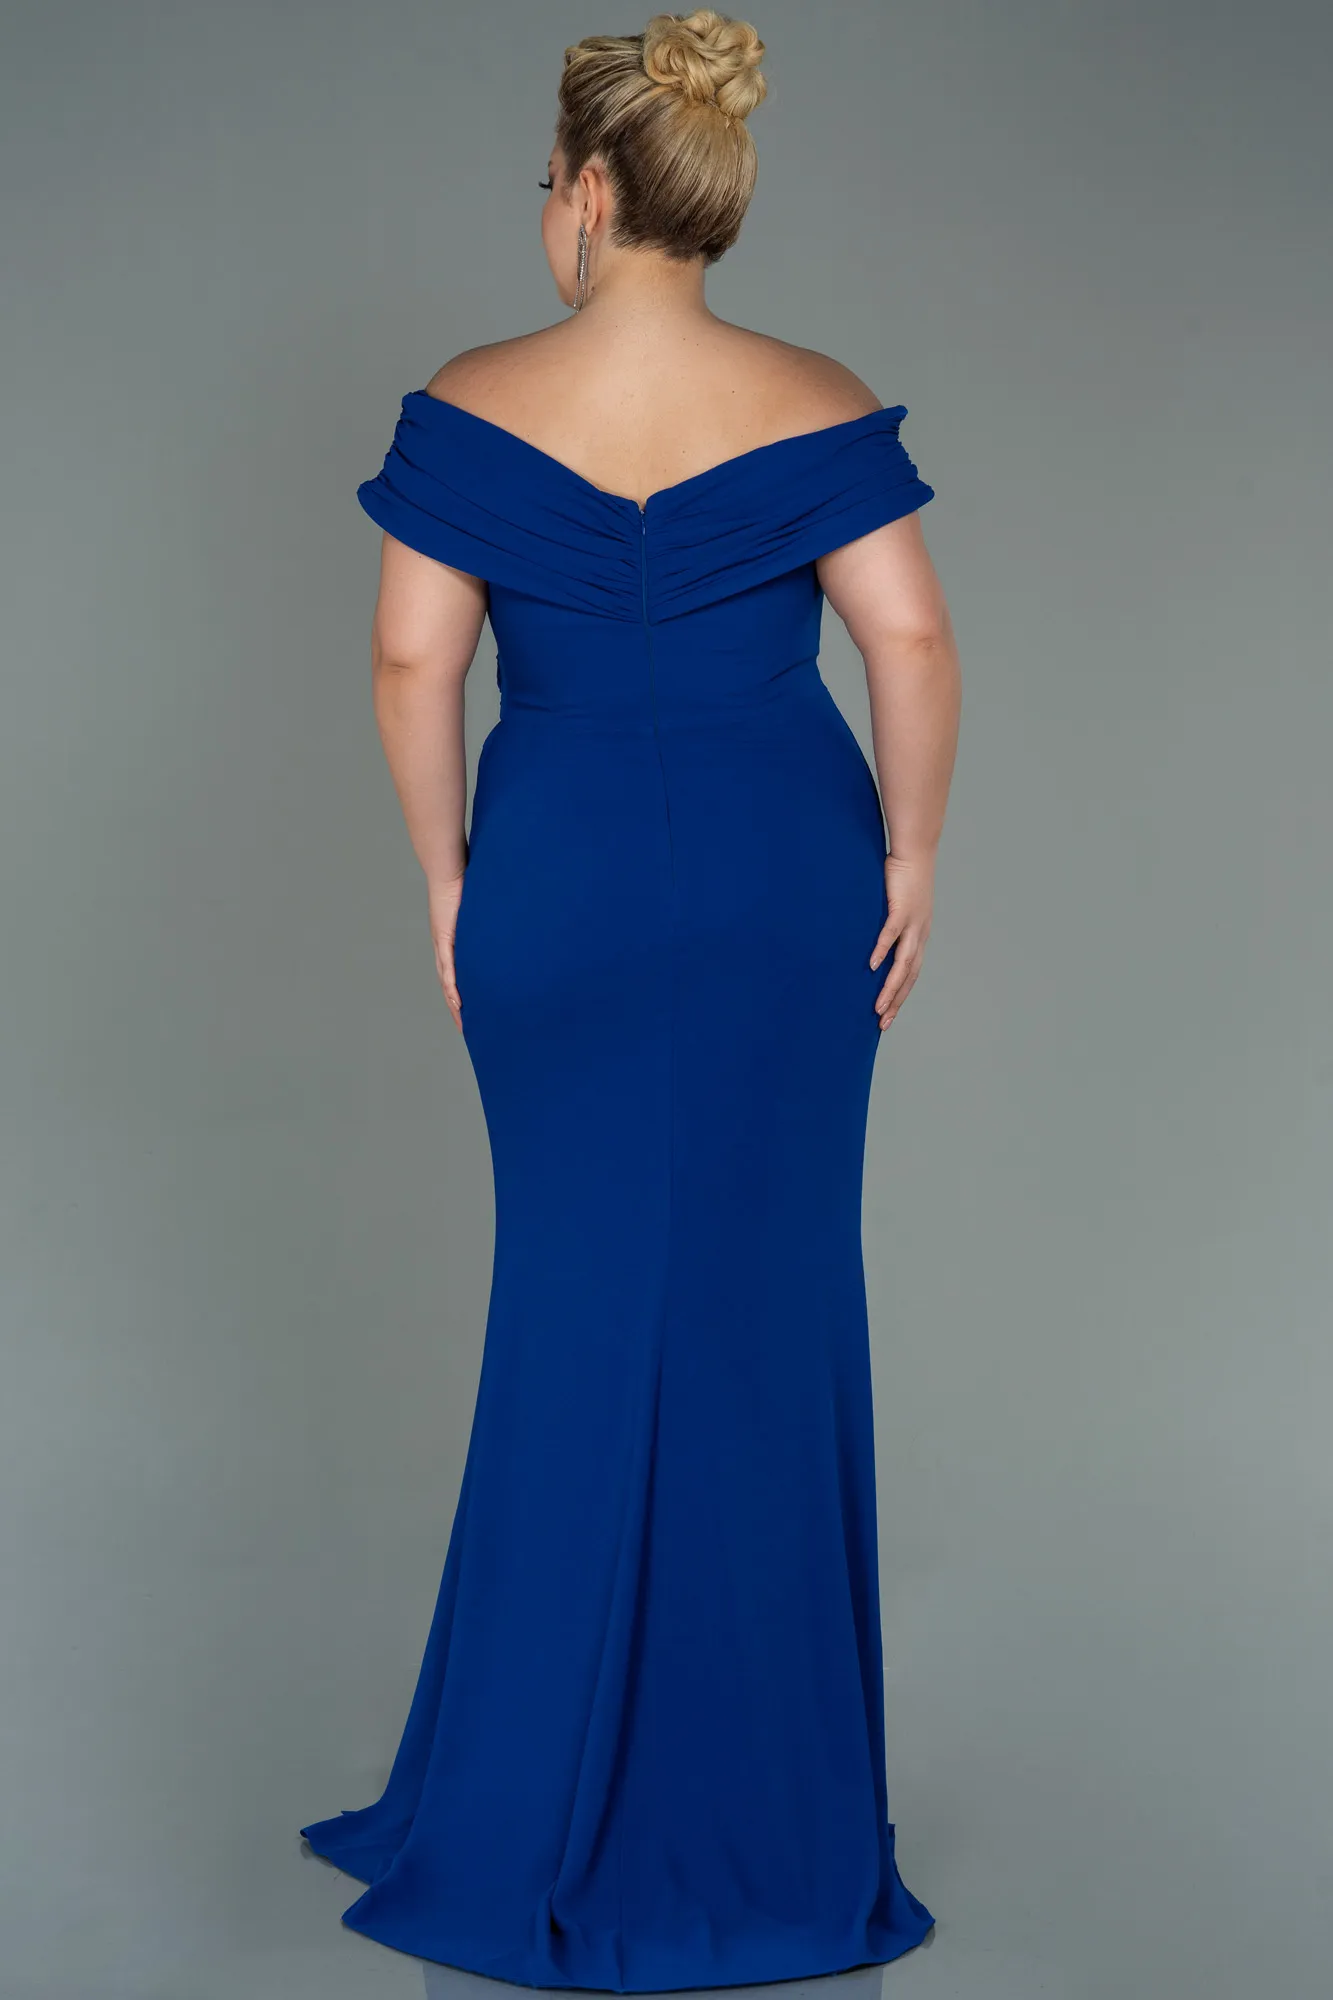 Sax Blue-Long Plus Size Evening Dress ABU3172